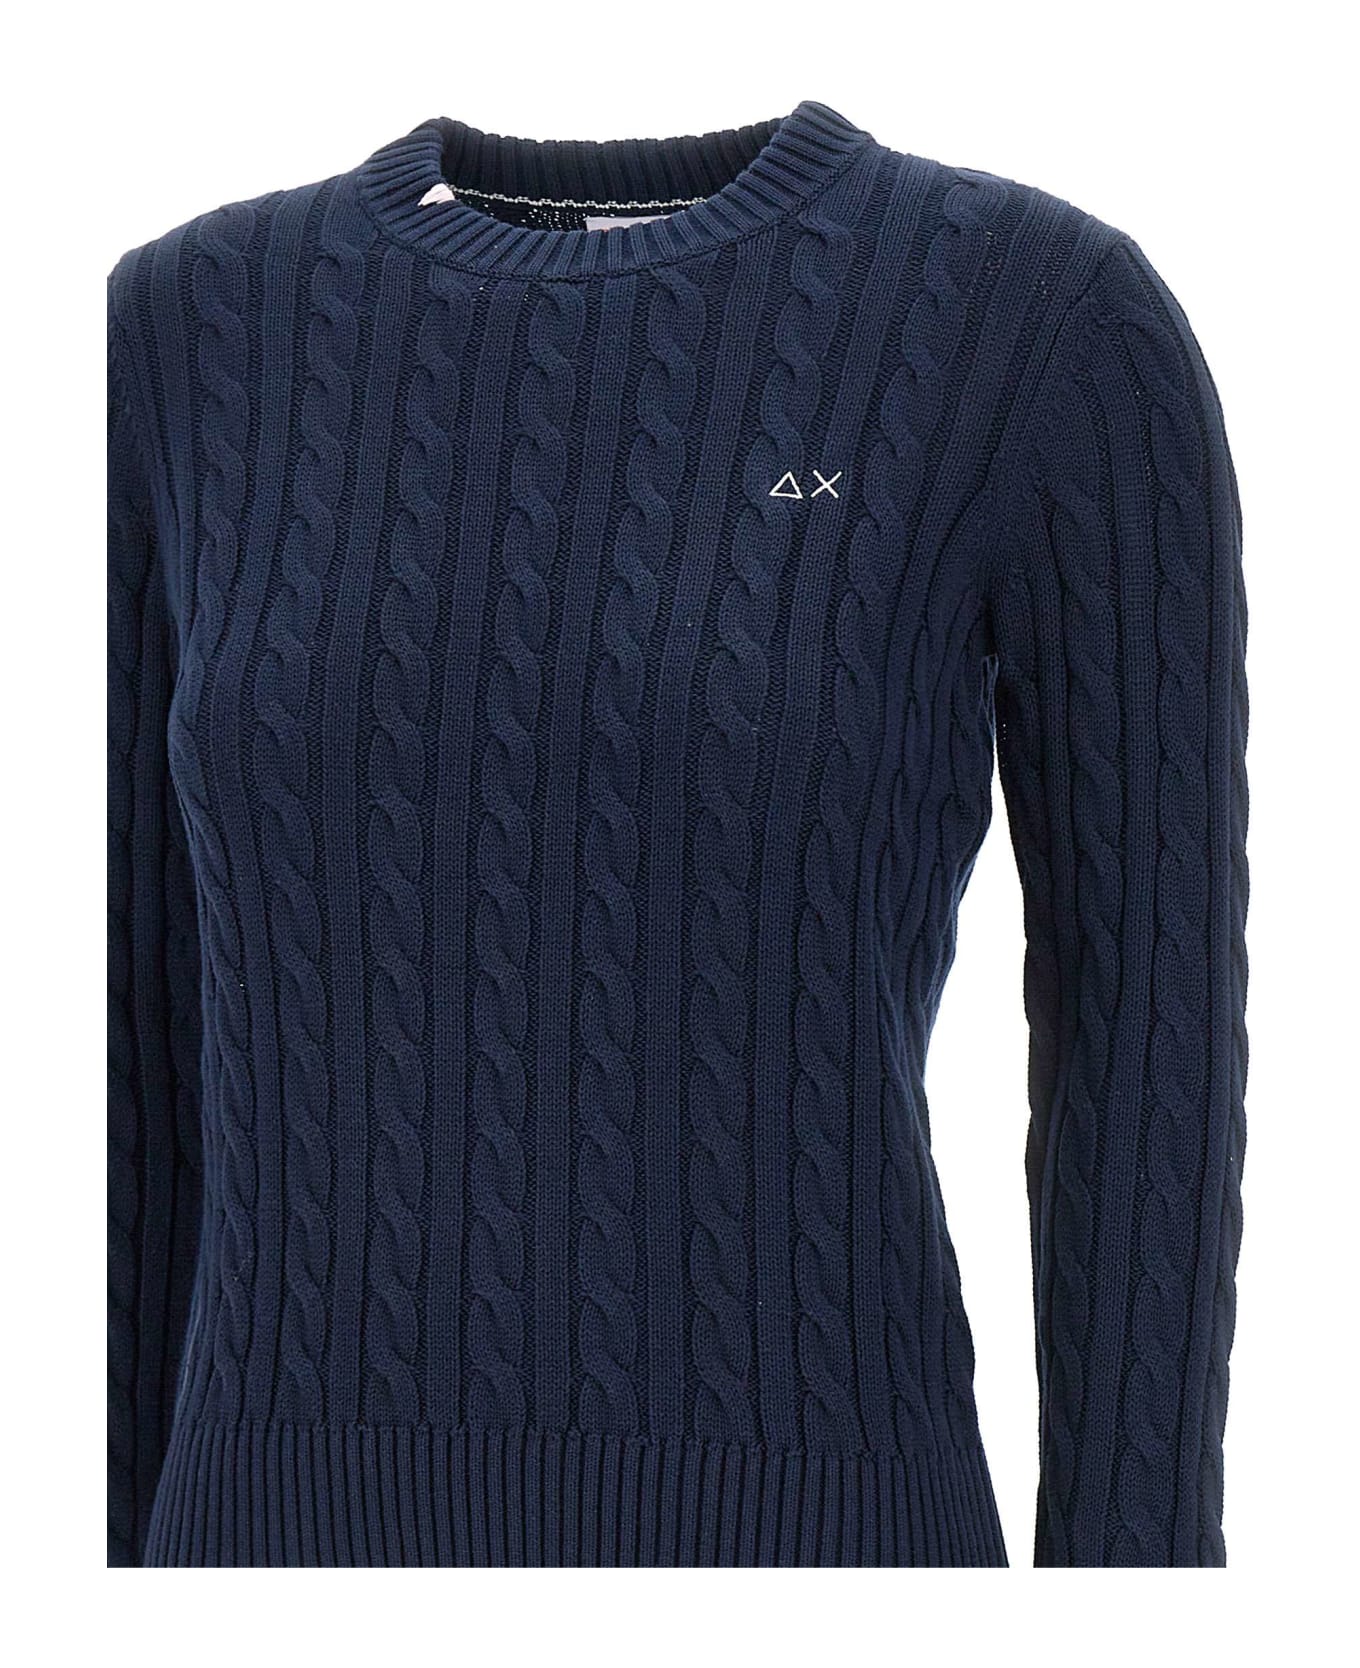 Sun 68 'round Neck Cable' Cotton Sweater